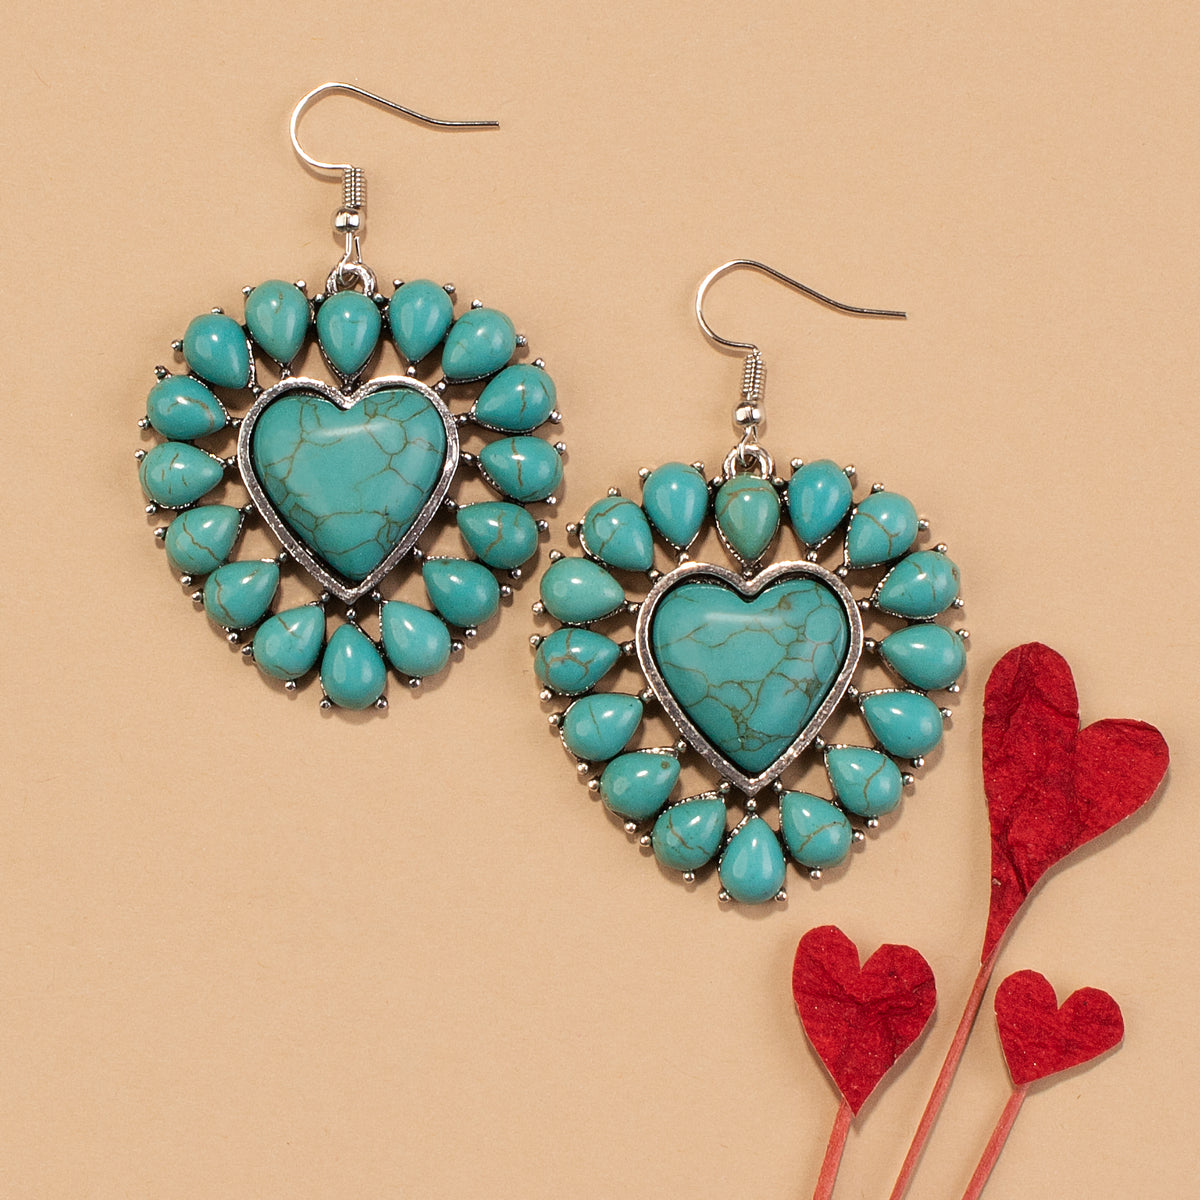 734031 - Heart Earrings - Turquoise & Silver - Fashion Jewelry Wholesale